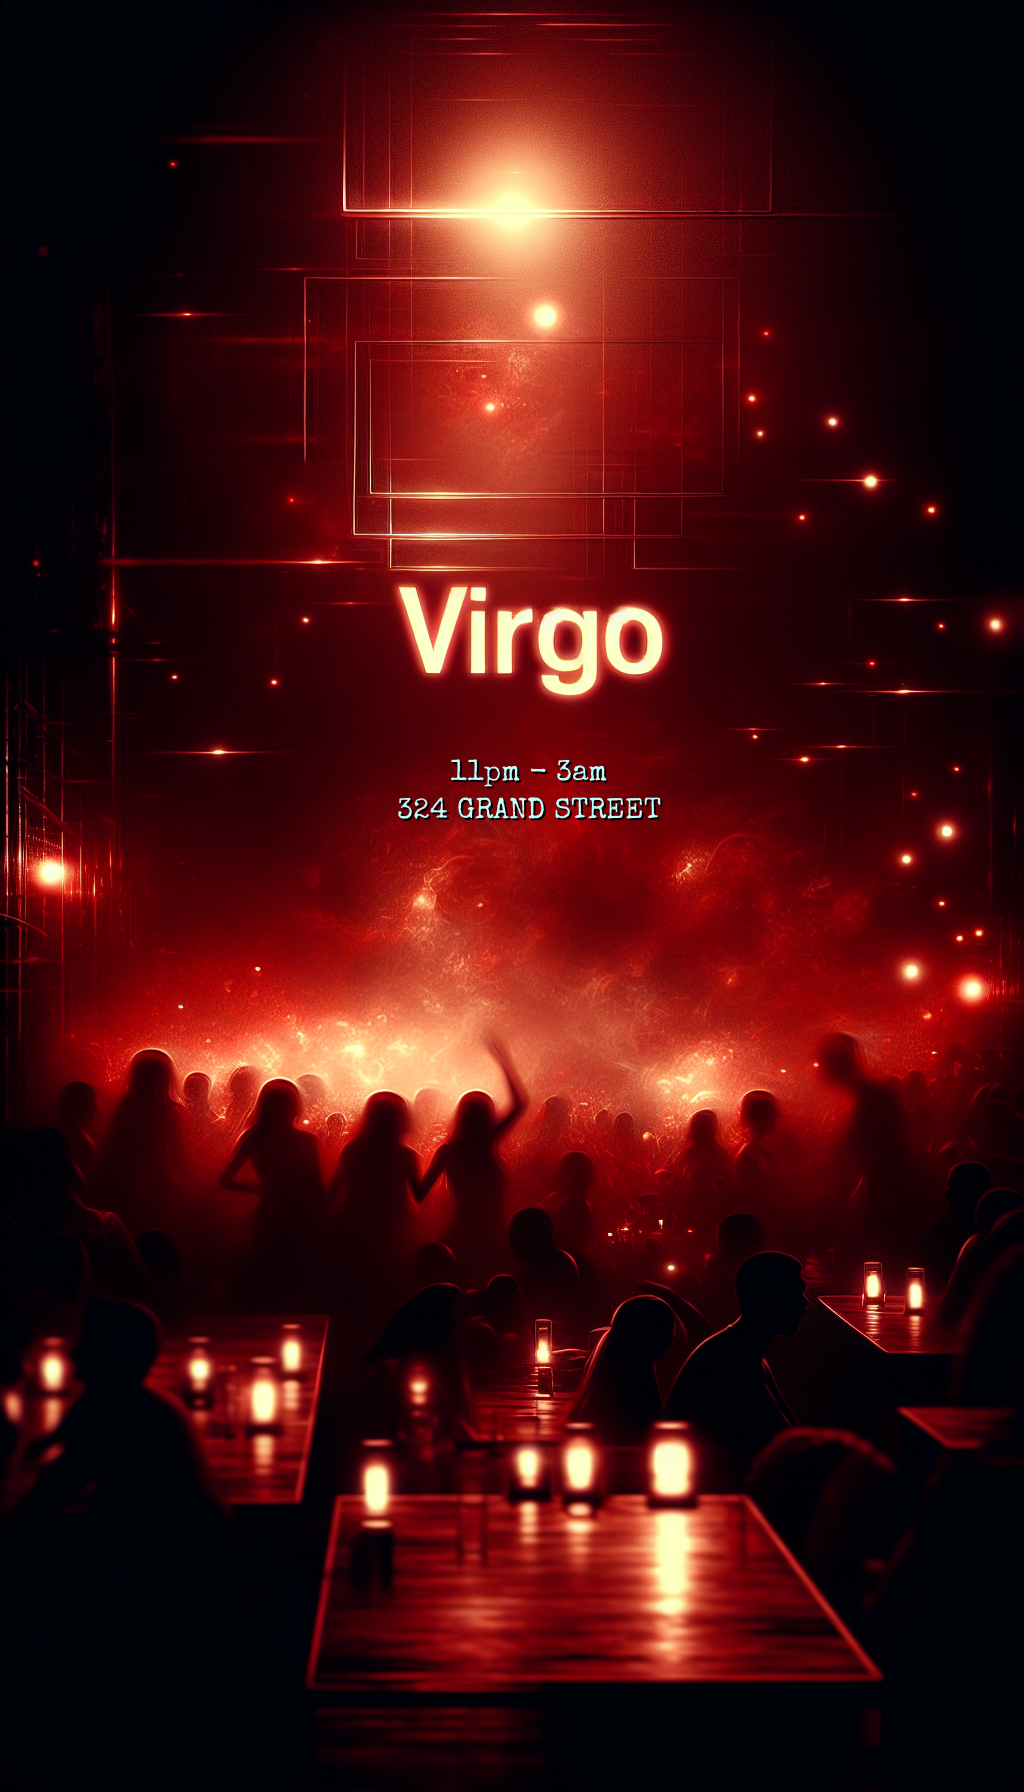 Virgo Club